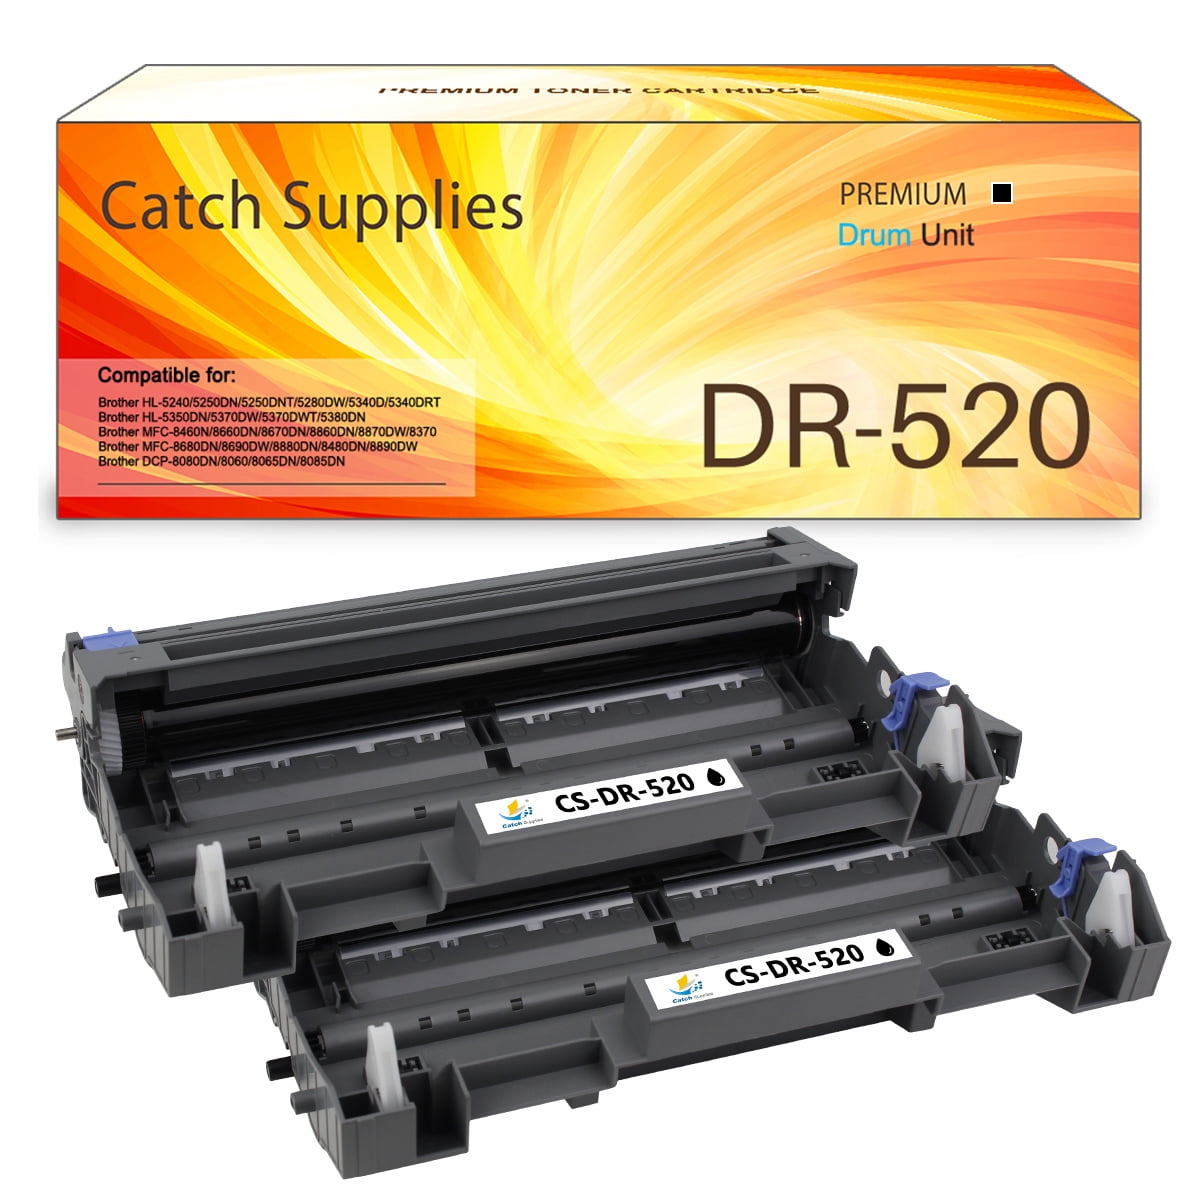 Catch Supplies Compatible Drum Unit Replacement for DR-520 Dcp-8060 8065 HL-5240 5250 Mfc-8460 8470 8660 8670 8860 8870 Printer 2-Pack) - Walmart.com